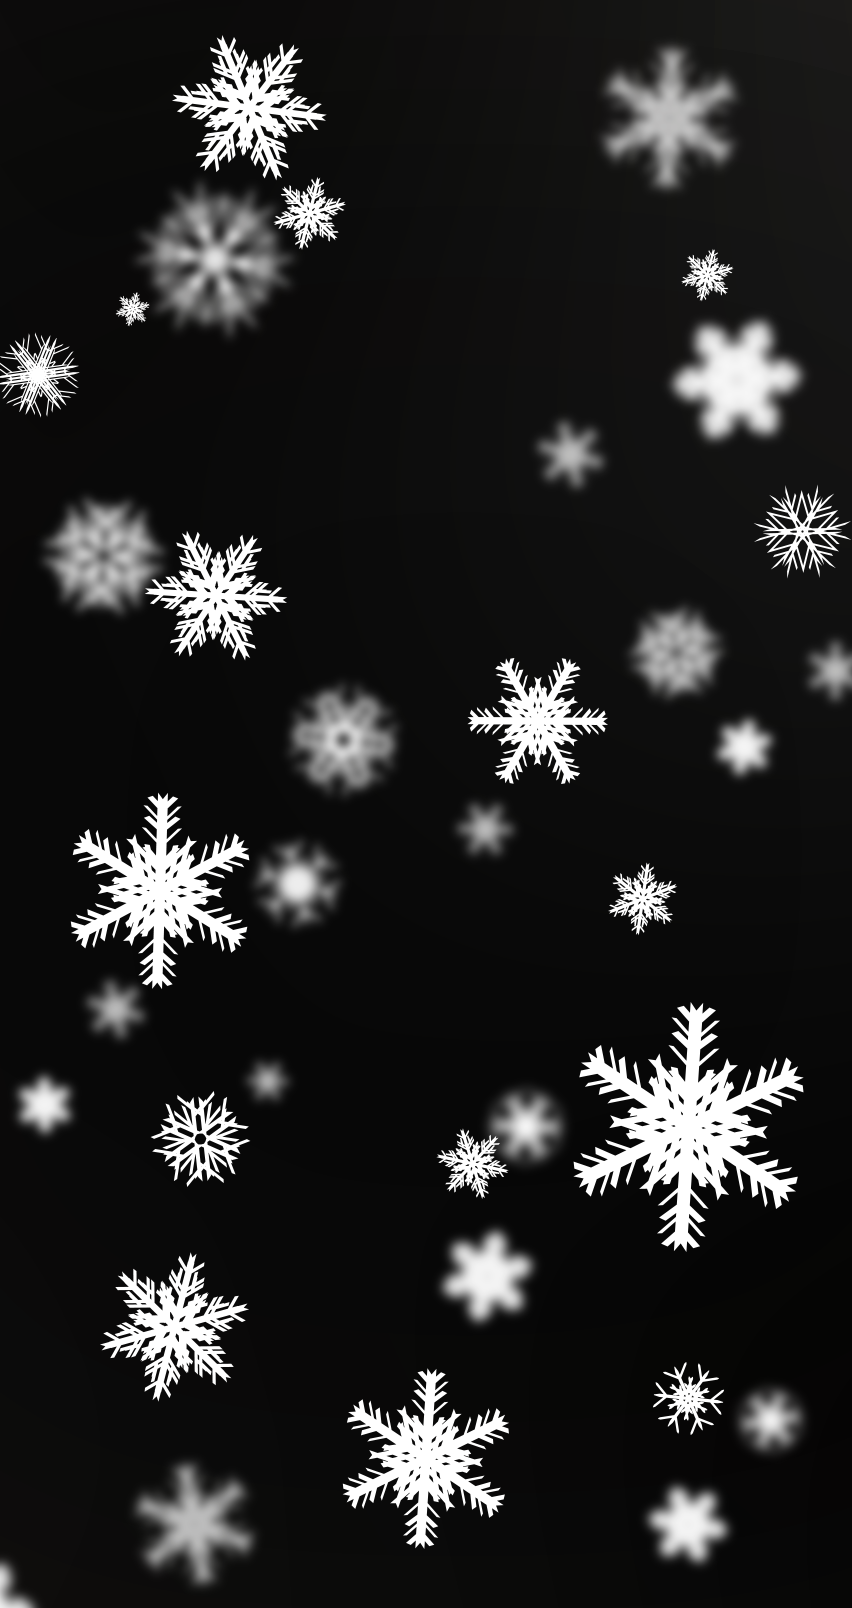 Christmas festive wallpaper desktop background iphone mac PC iPad android snow snowflakes